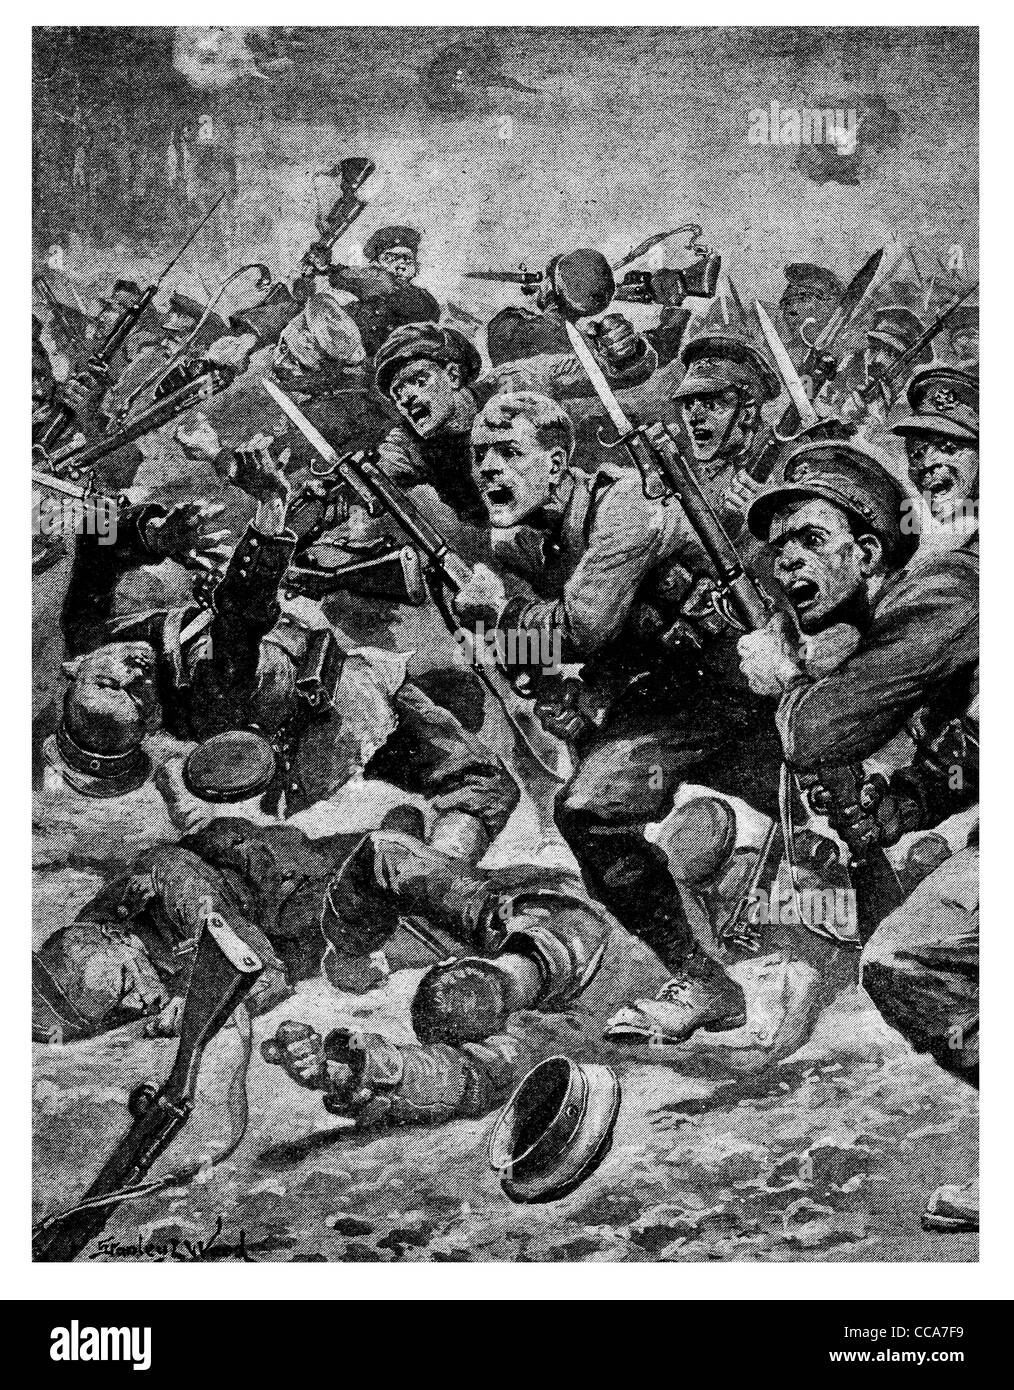 1916 Irish Wexford Regiment daring bayonet charge German hand to hand combat fighting fight brawl fist punch charging rage Stock Photo